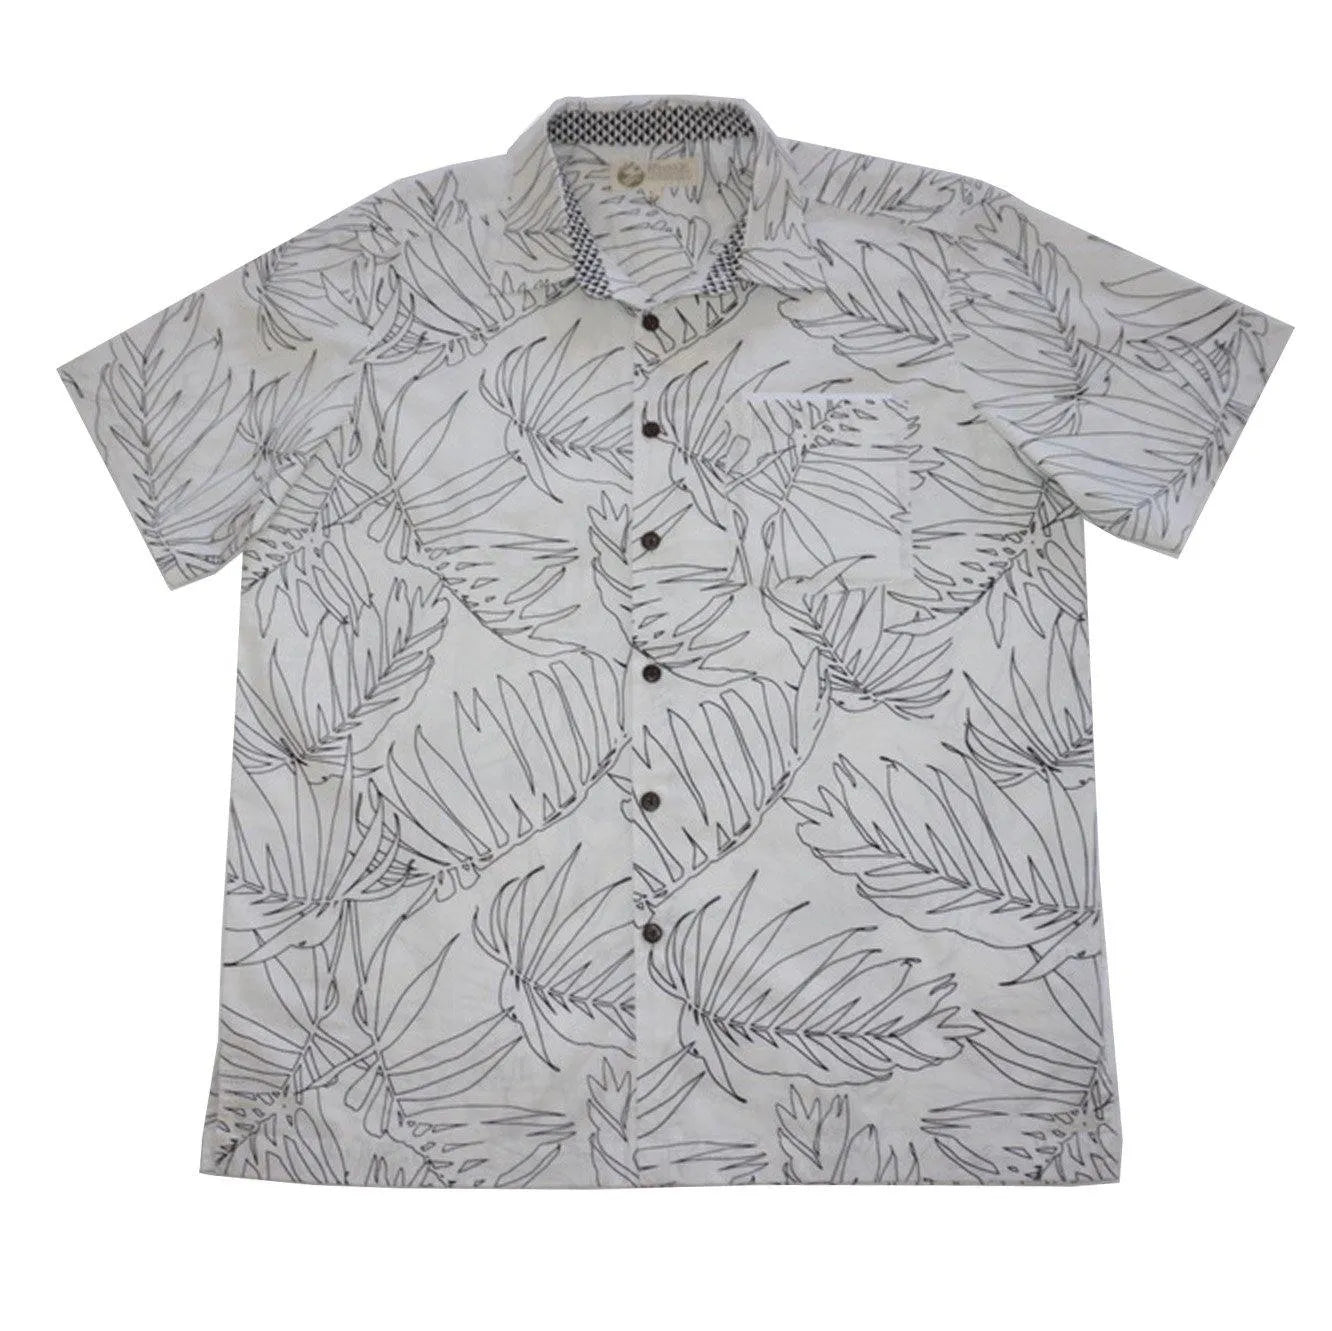 Hawaiian shirt with palm leaf design kapa print collar, standard pocket and coconut buttons laid flat..